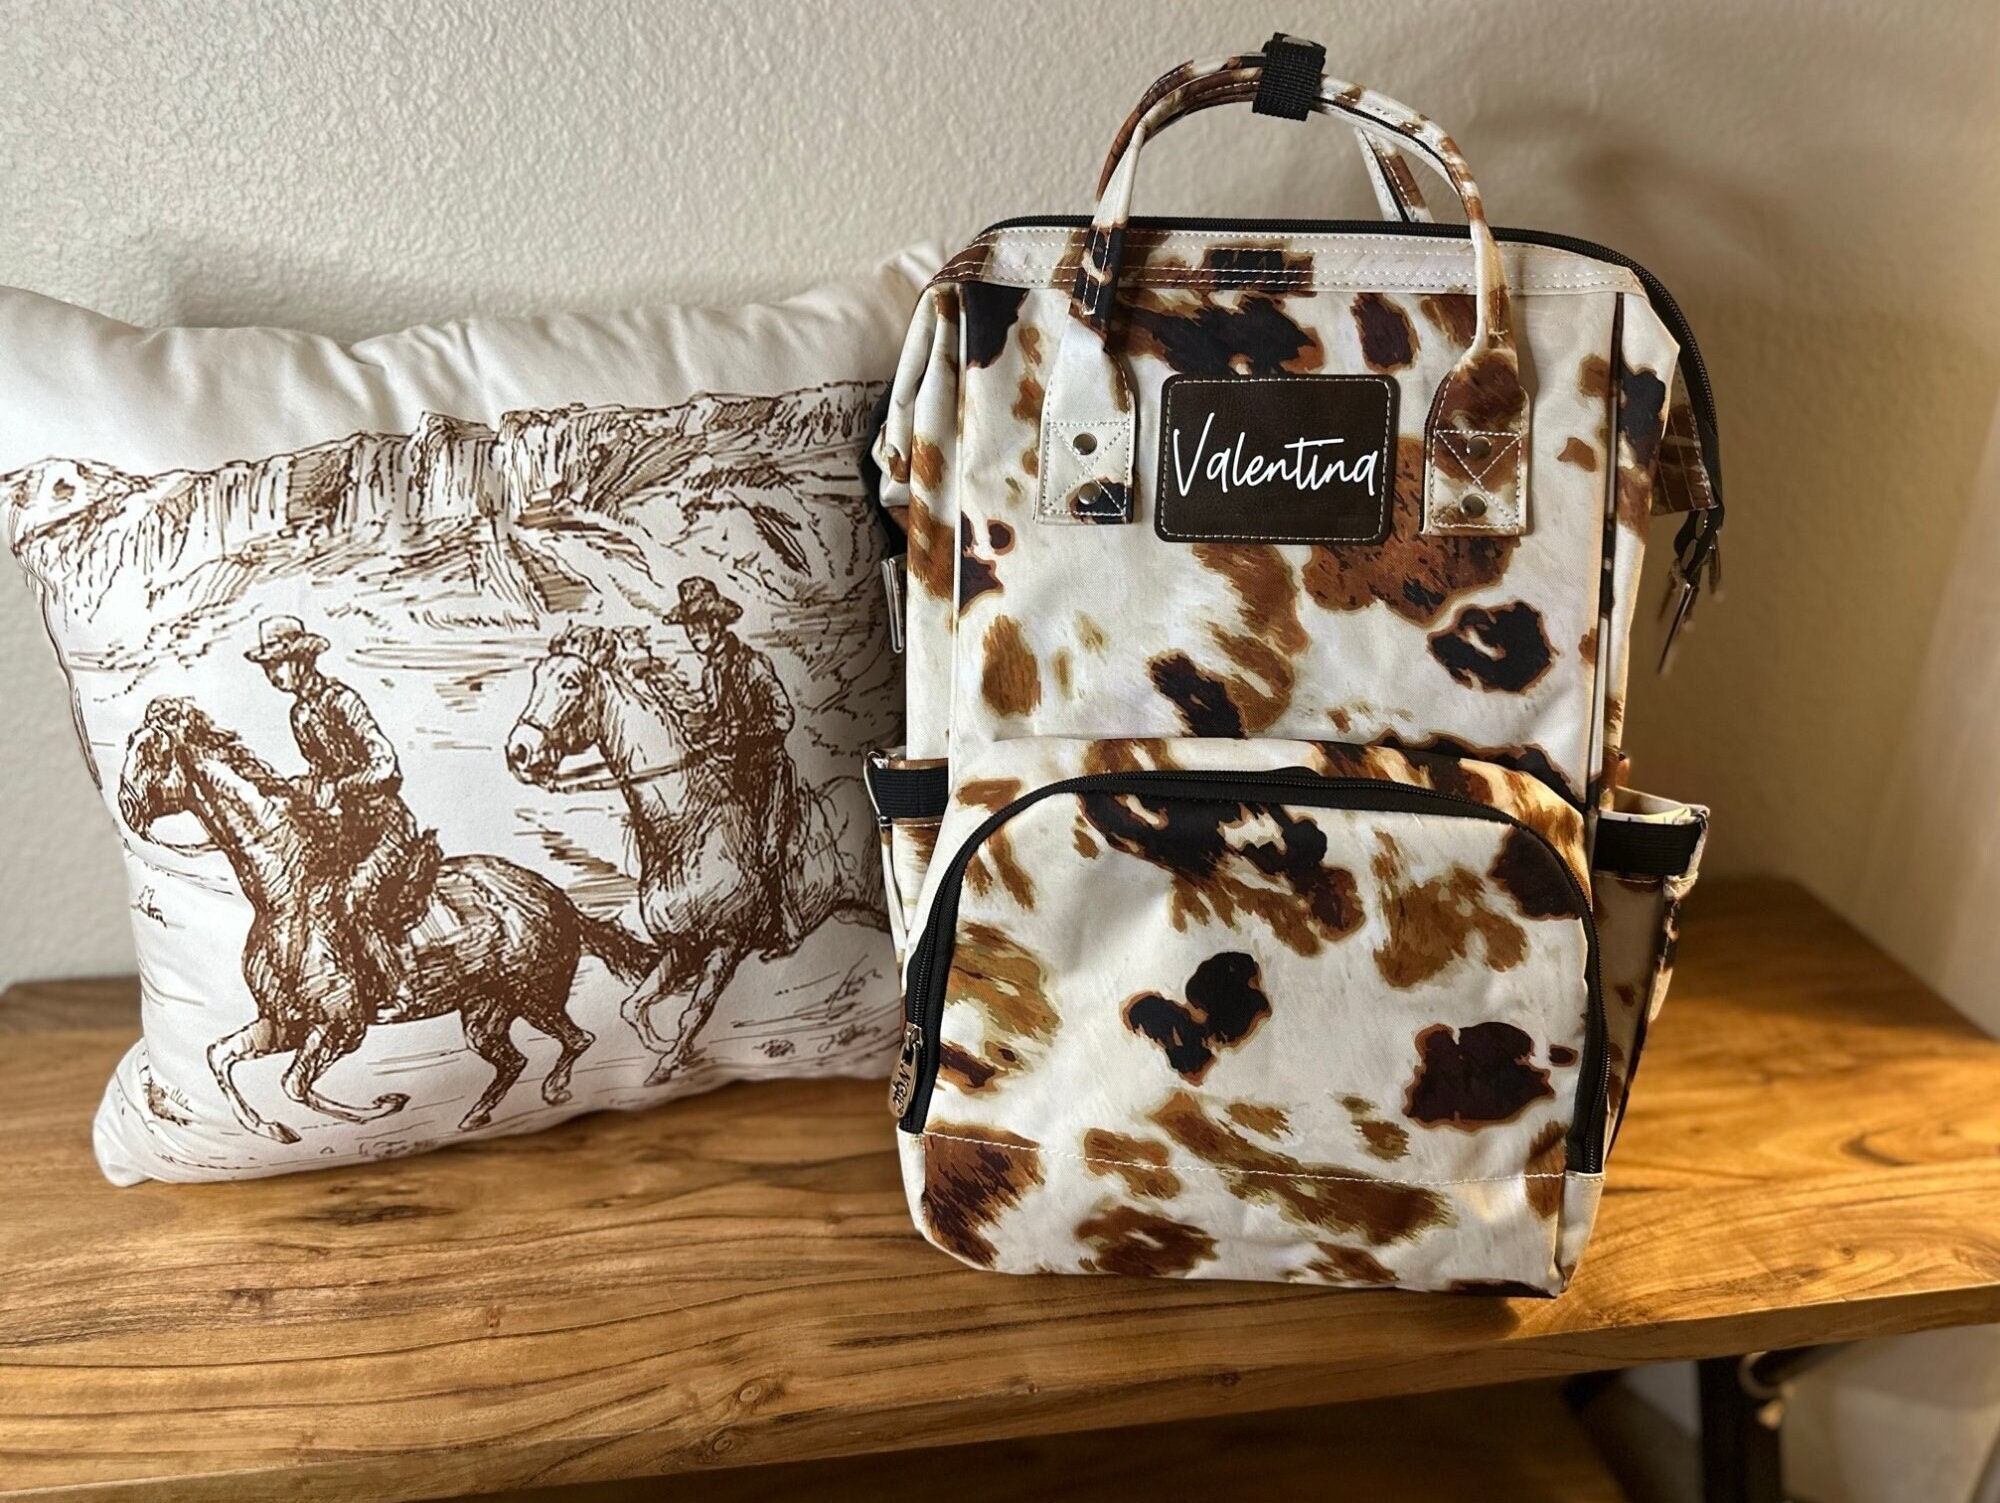 Cow Print Diaper Bag Backpack – Monogram Maiden